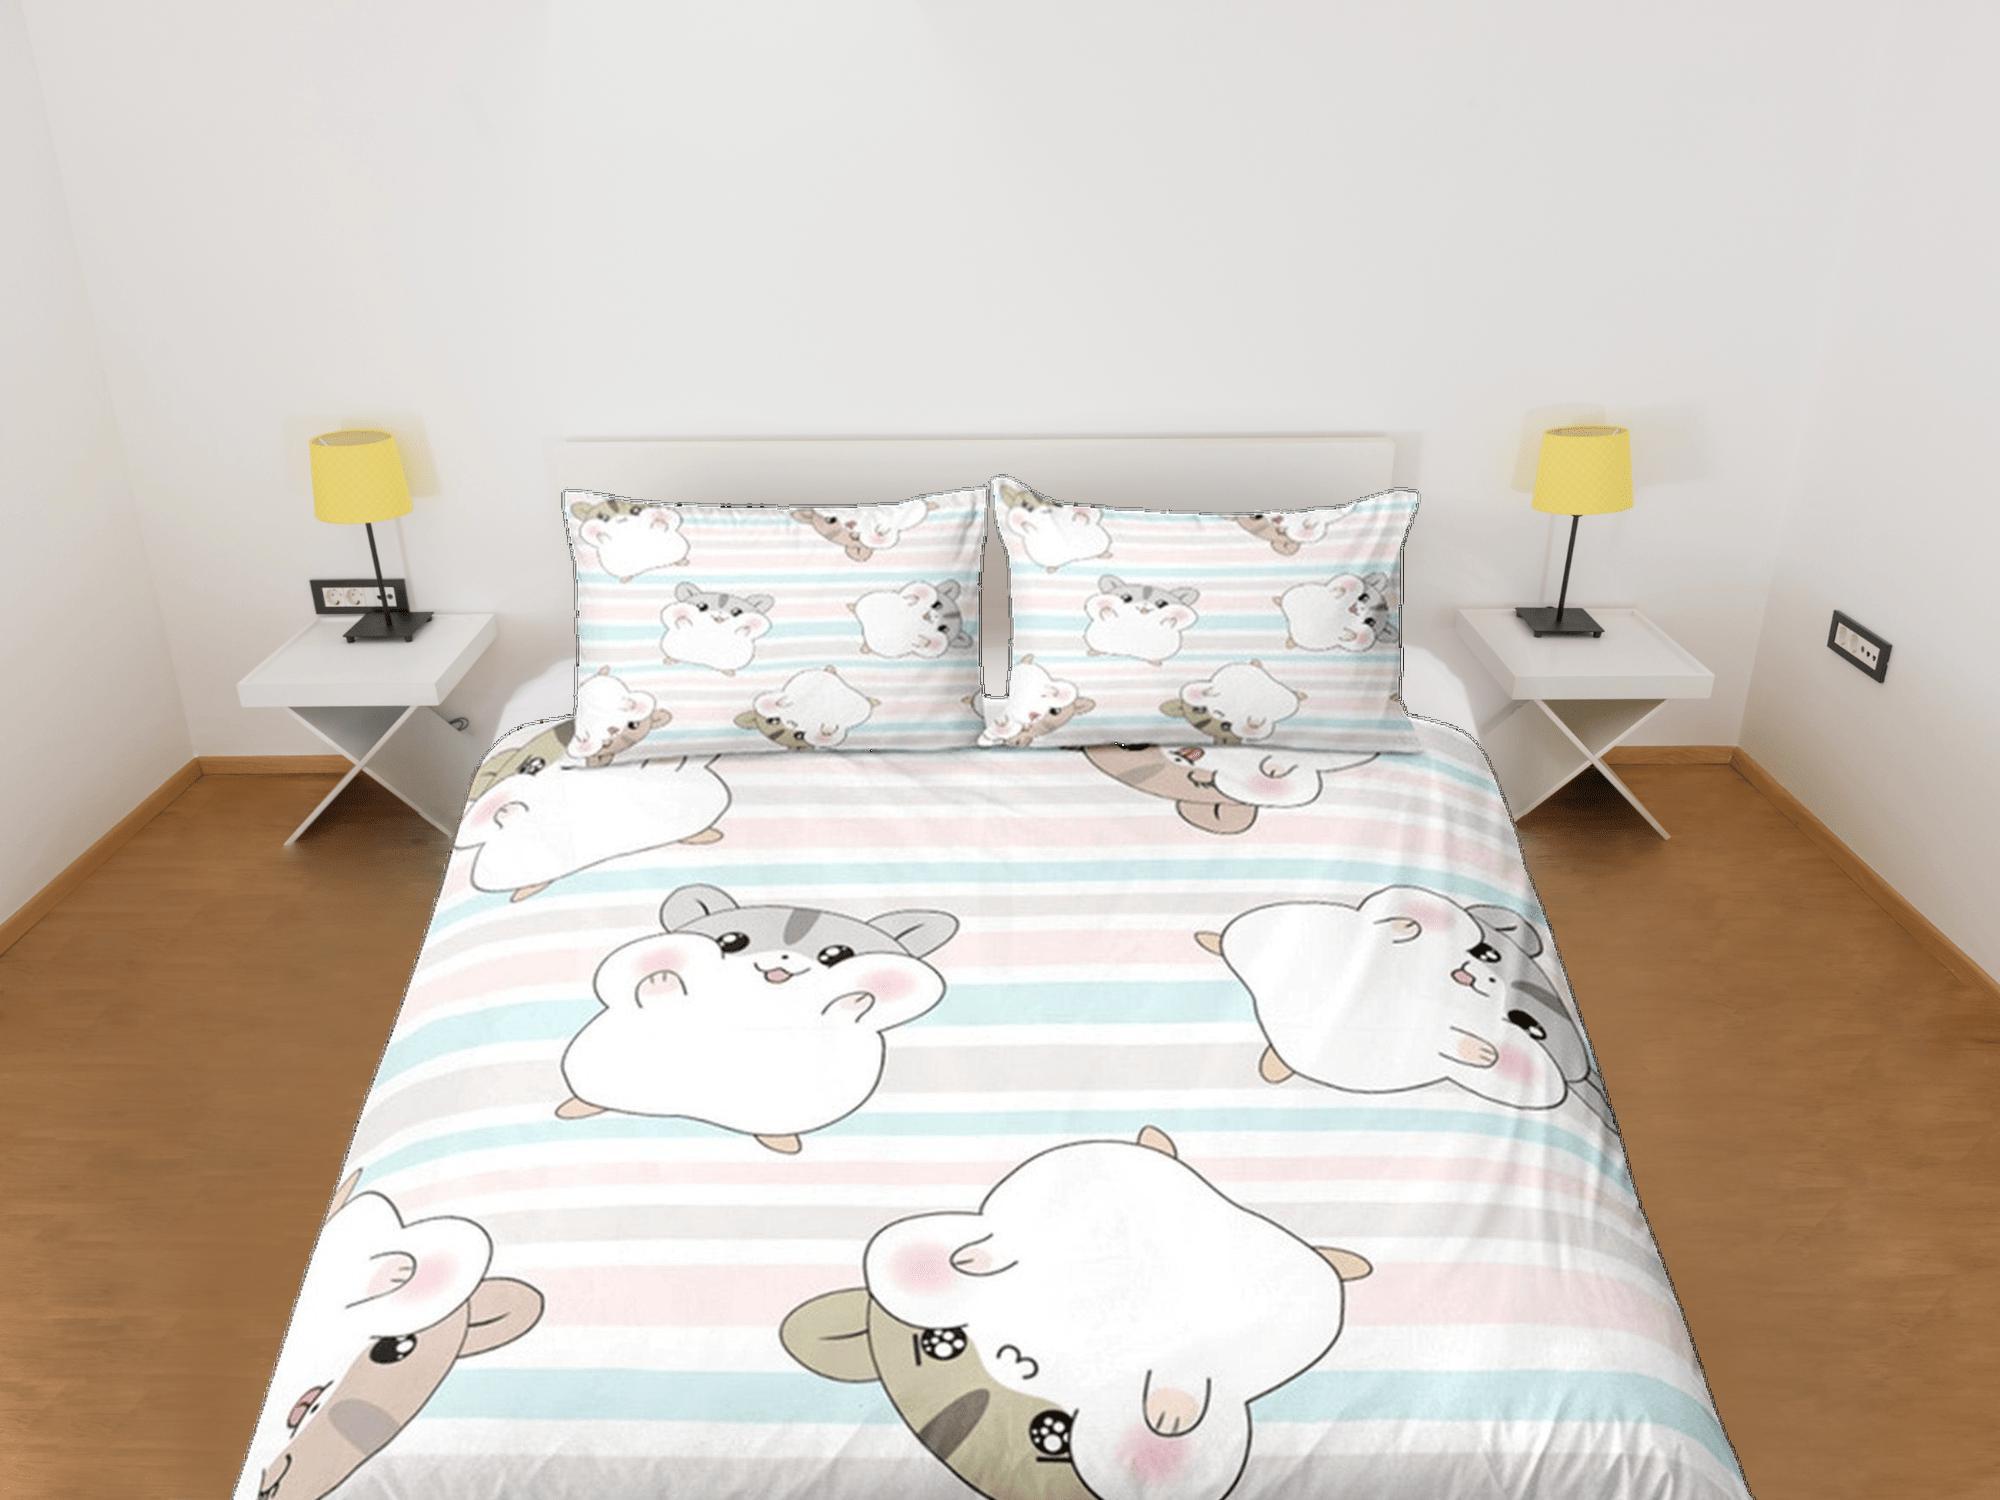 daintyduvet Hamster Anime Duvet Cover Set Cute Bedspread, Kawaii Dorm Bedding Single with Pillowcase, Comforter Cover Twin